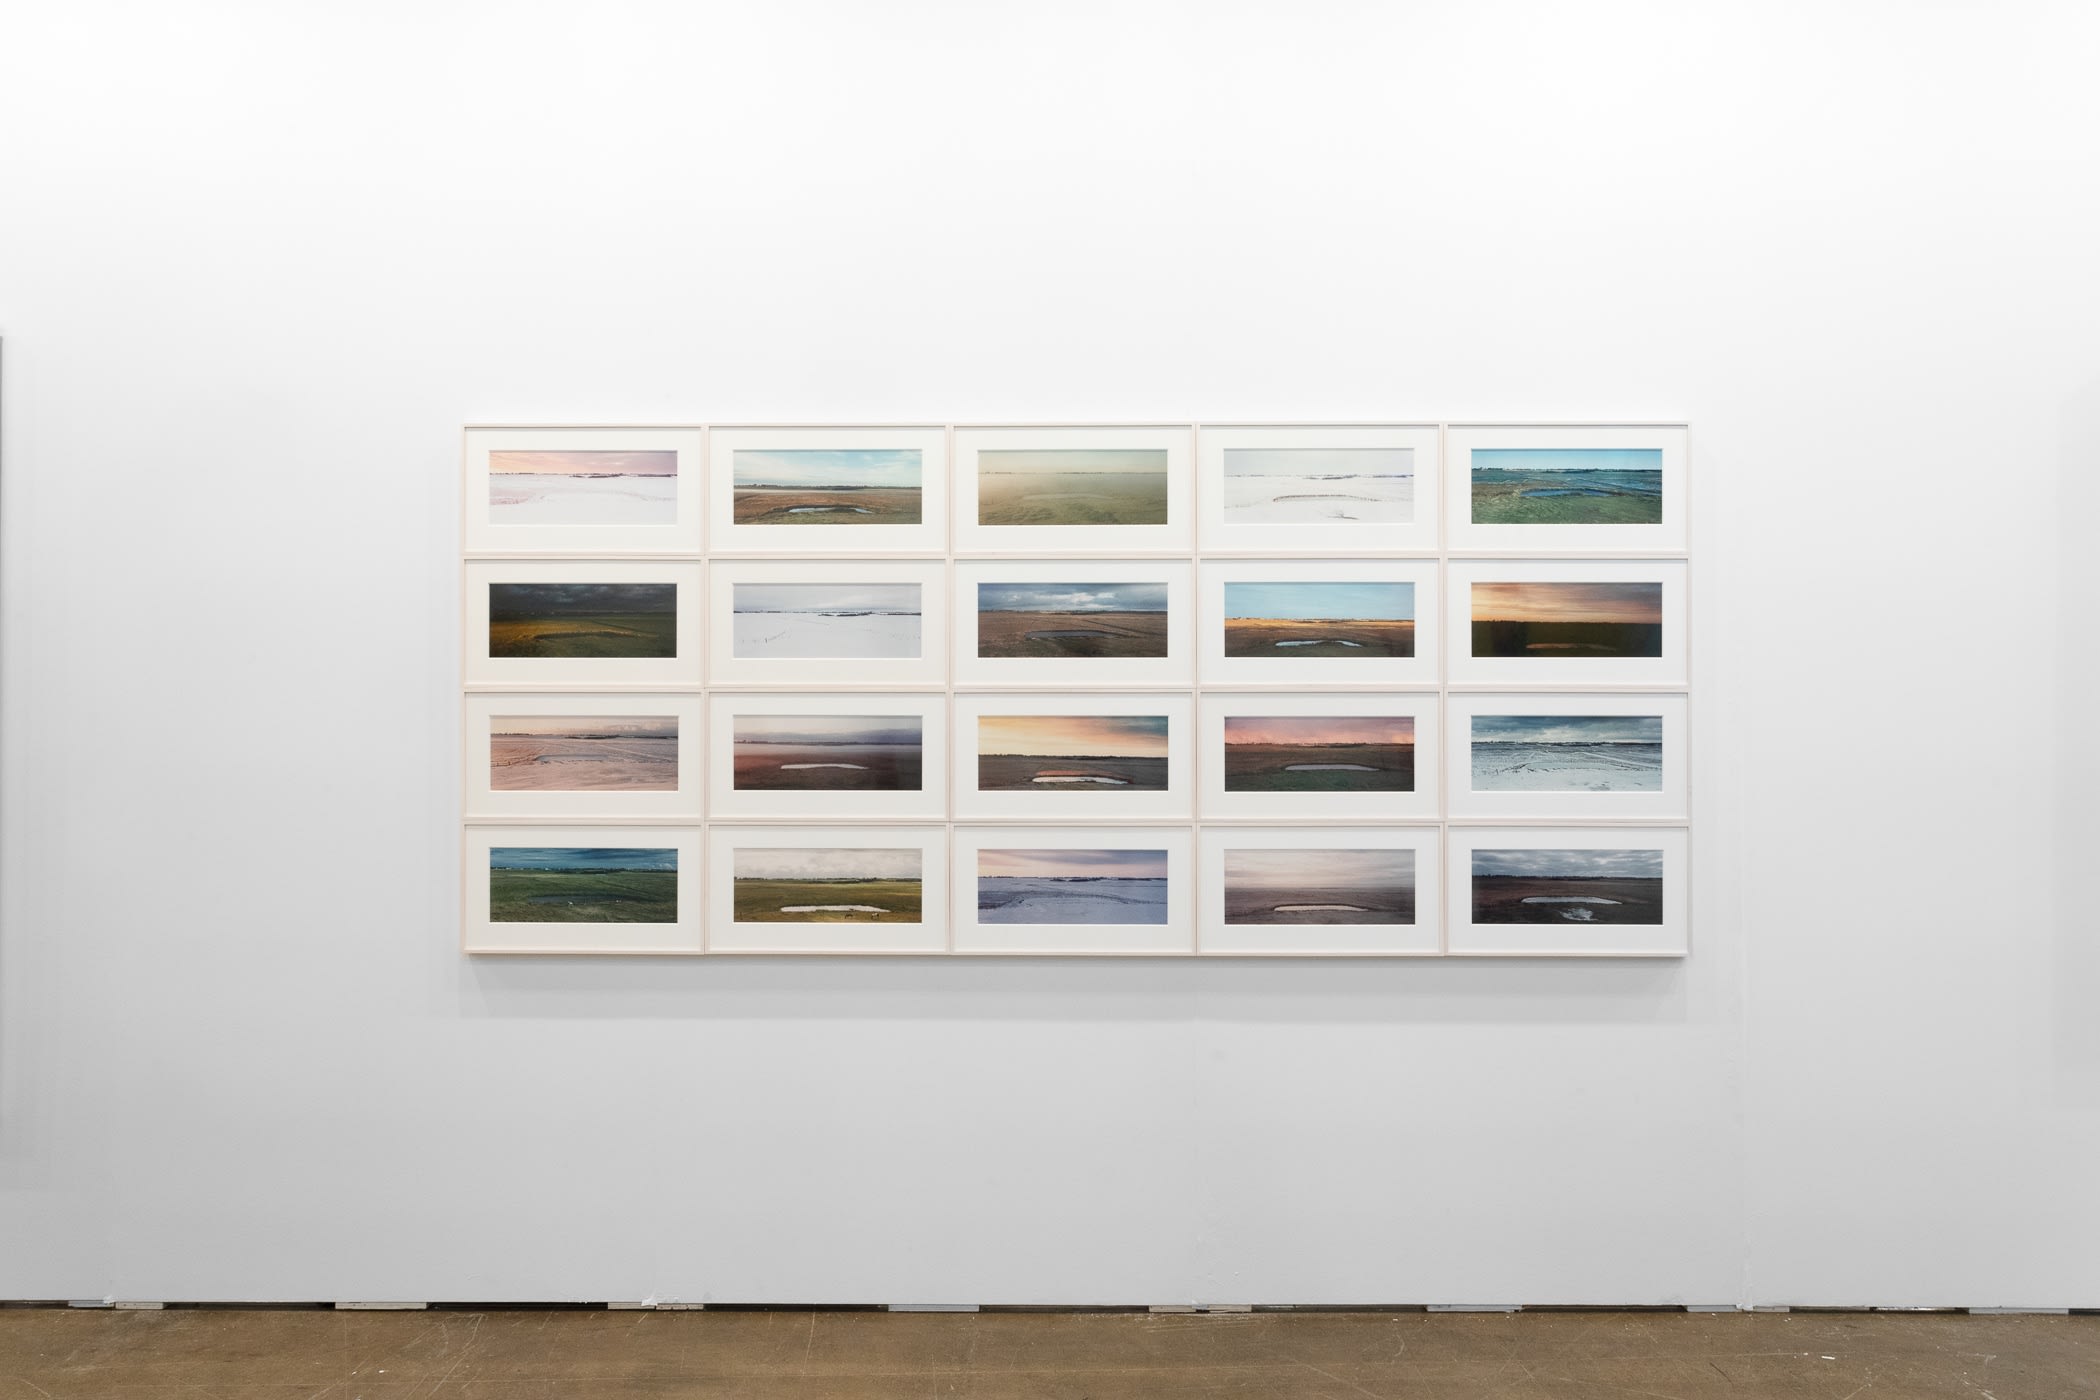 Thaddeus Holownia, Jolicure Pond, 1996-2004, 20 chromogenic contact prints, 9 x 3 2/4 ft. installed